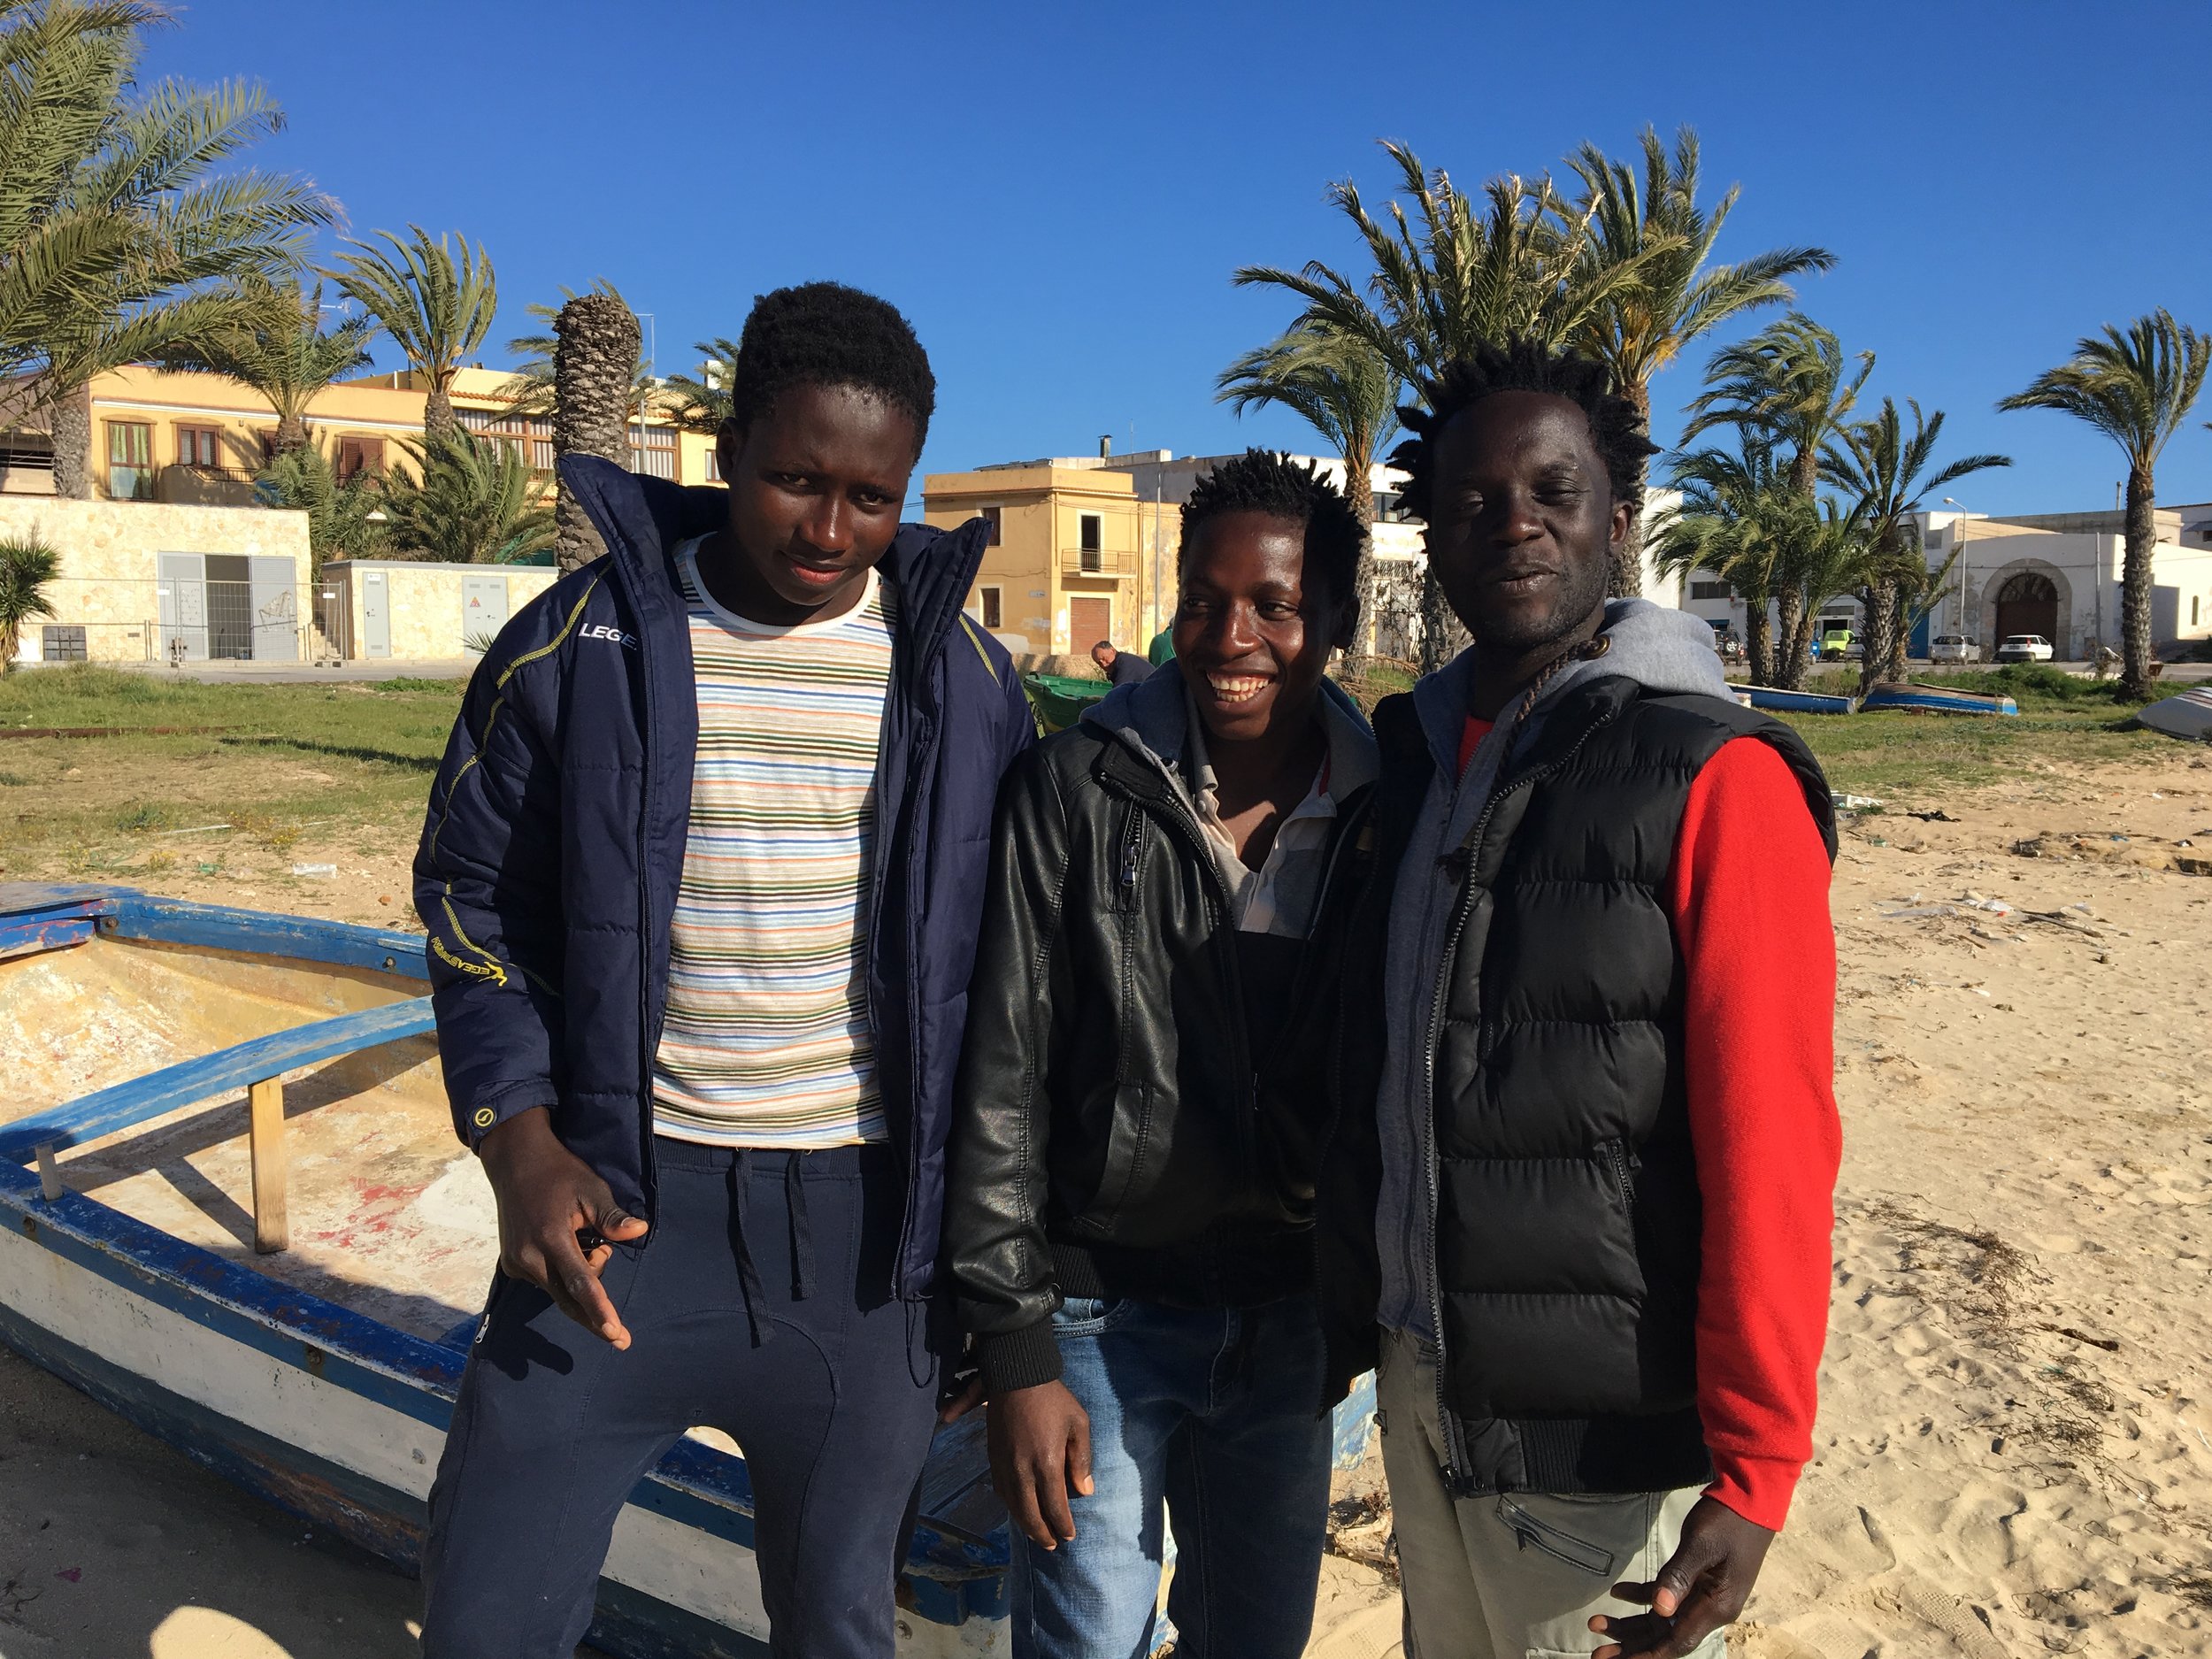   Ebrima and friends posing for the camera. Lampedusa, Italy; 3 April 2017. ©Pamela Kerpius  